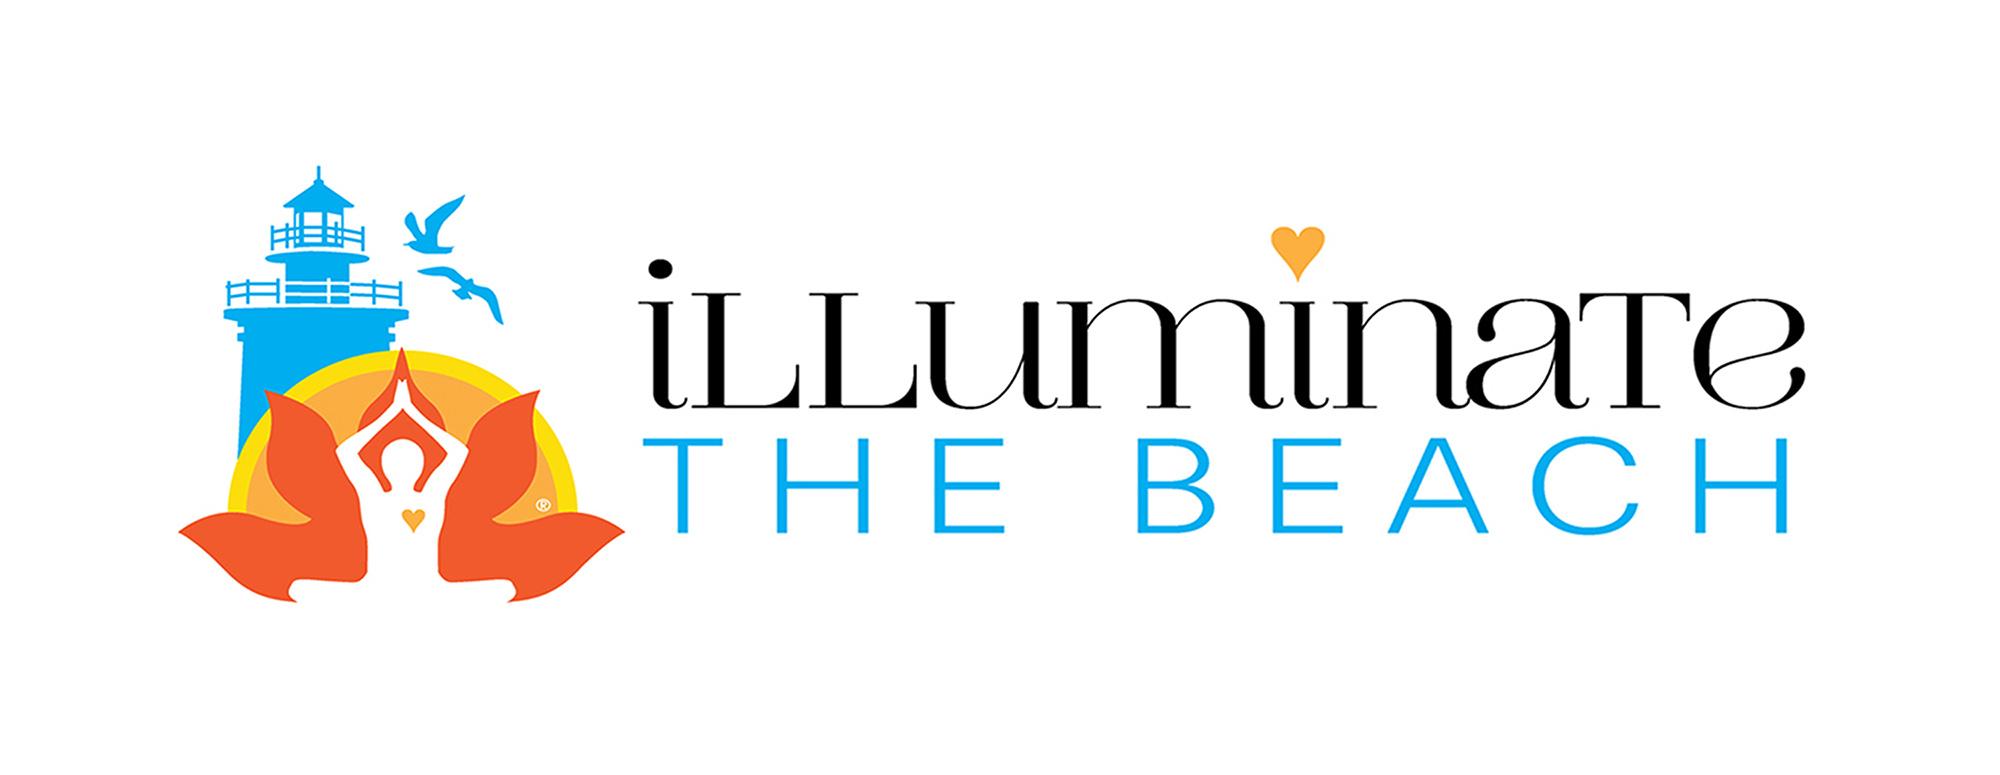 Illuminate the beach logo with yoga and lighthouse images